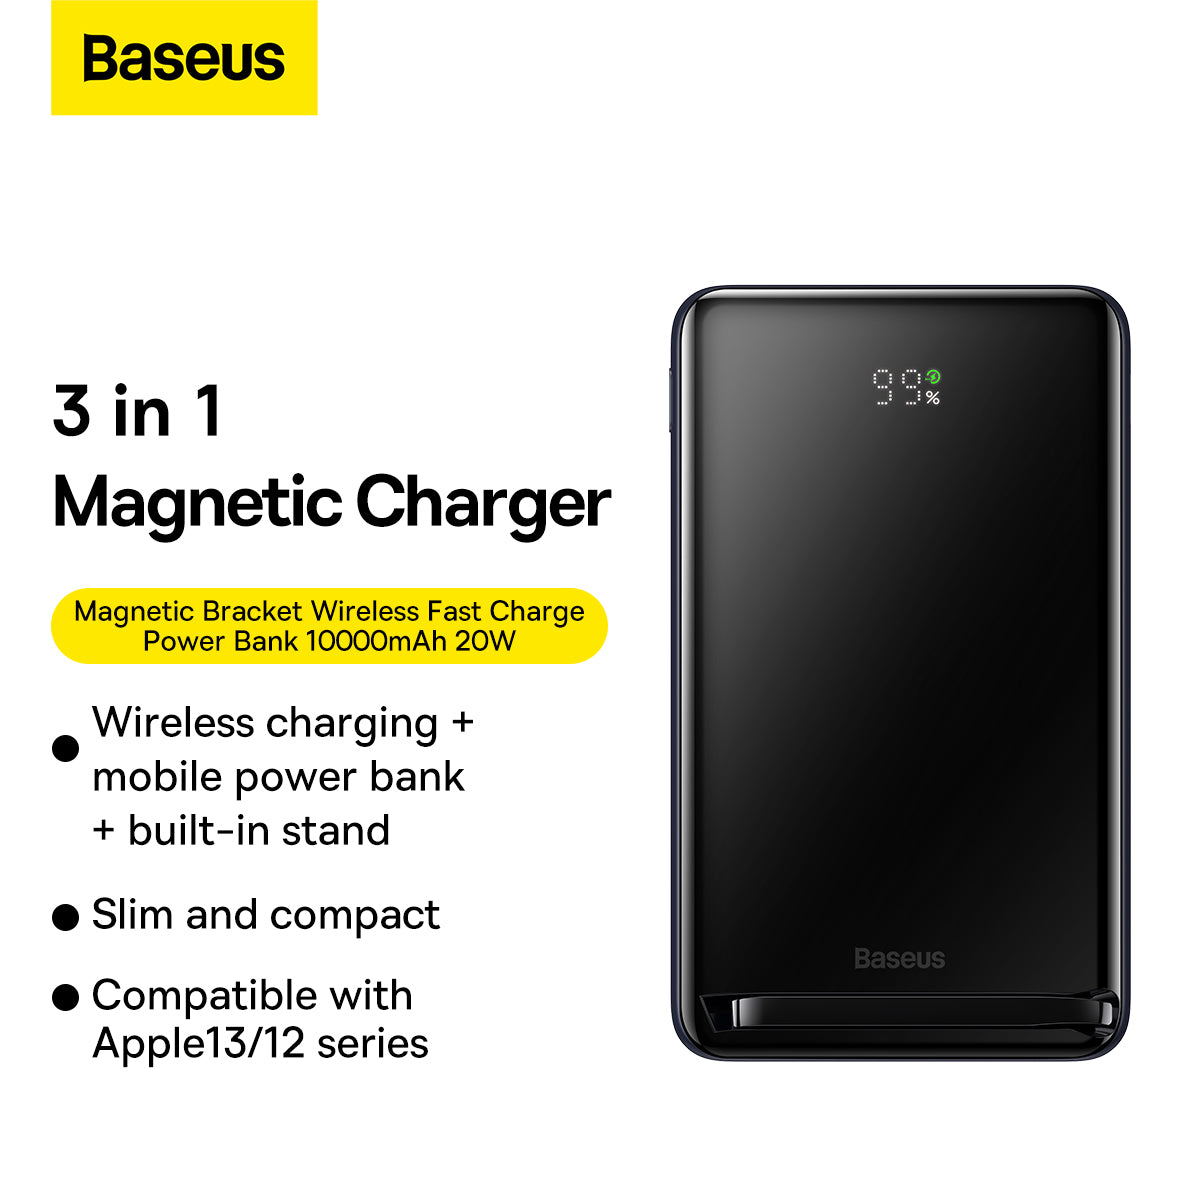 Baseus Magnetic Bracket Wireless Fast Charge Power Bank 10000mAh 20W Blue